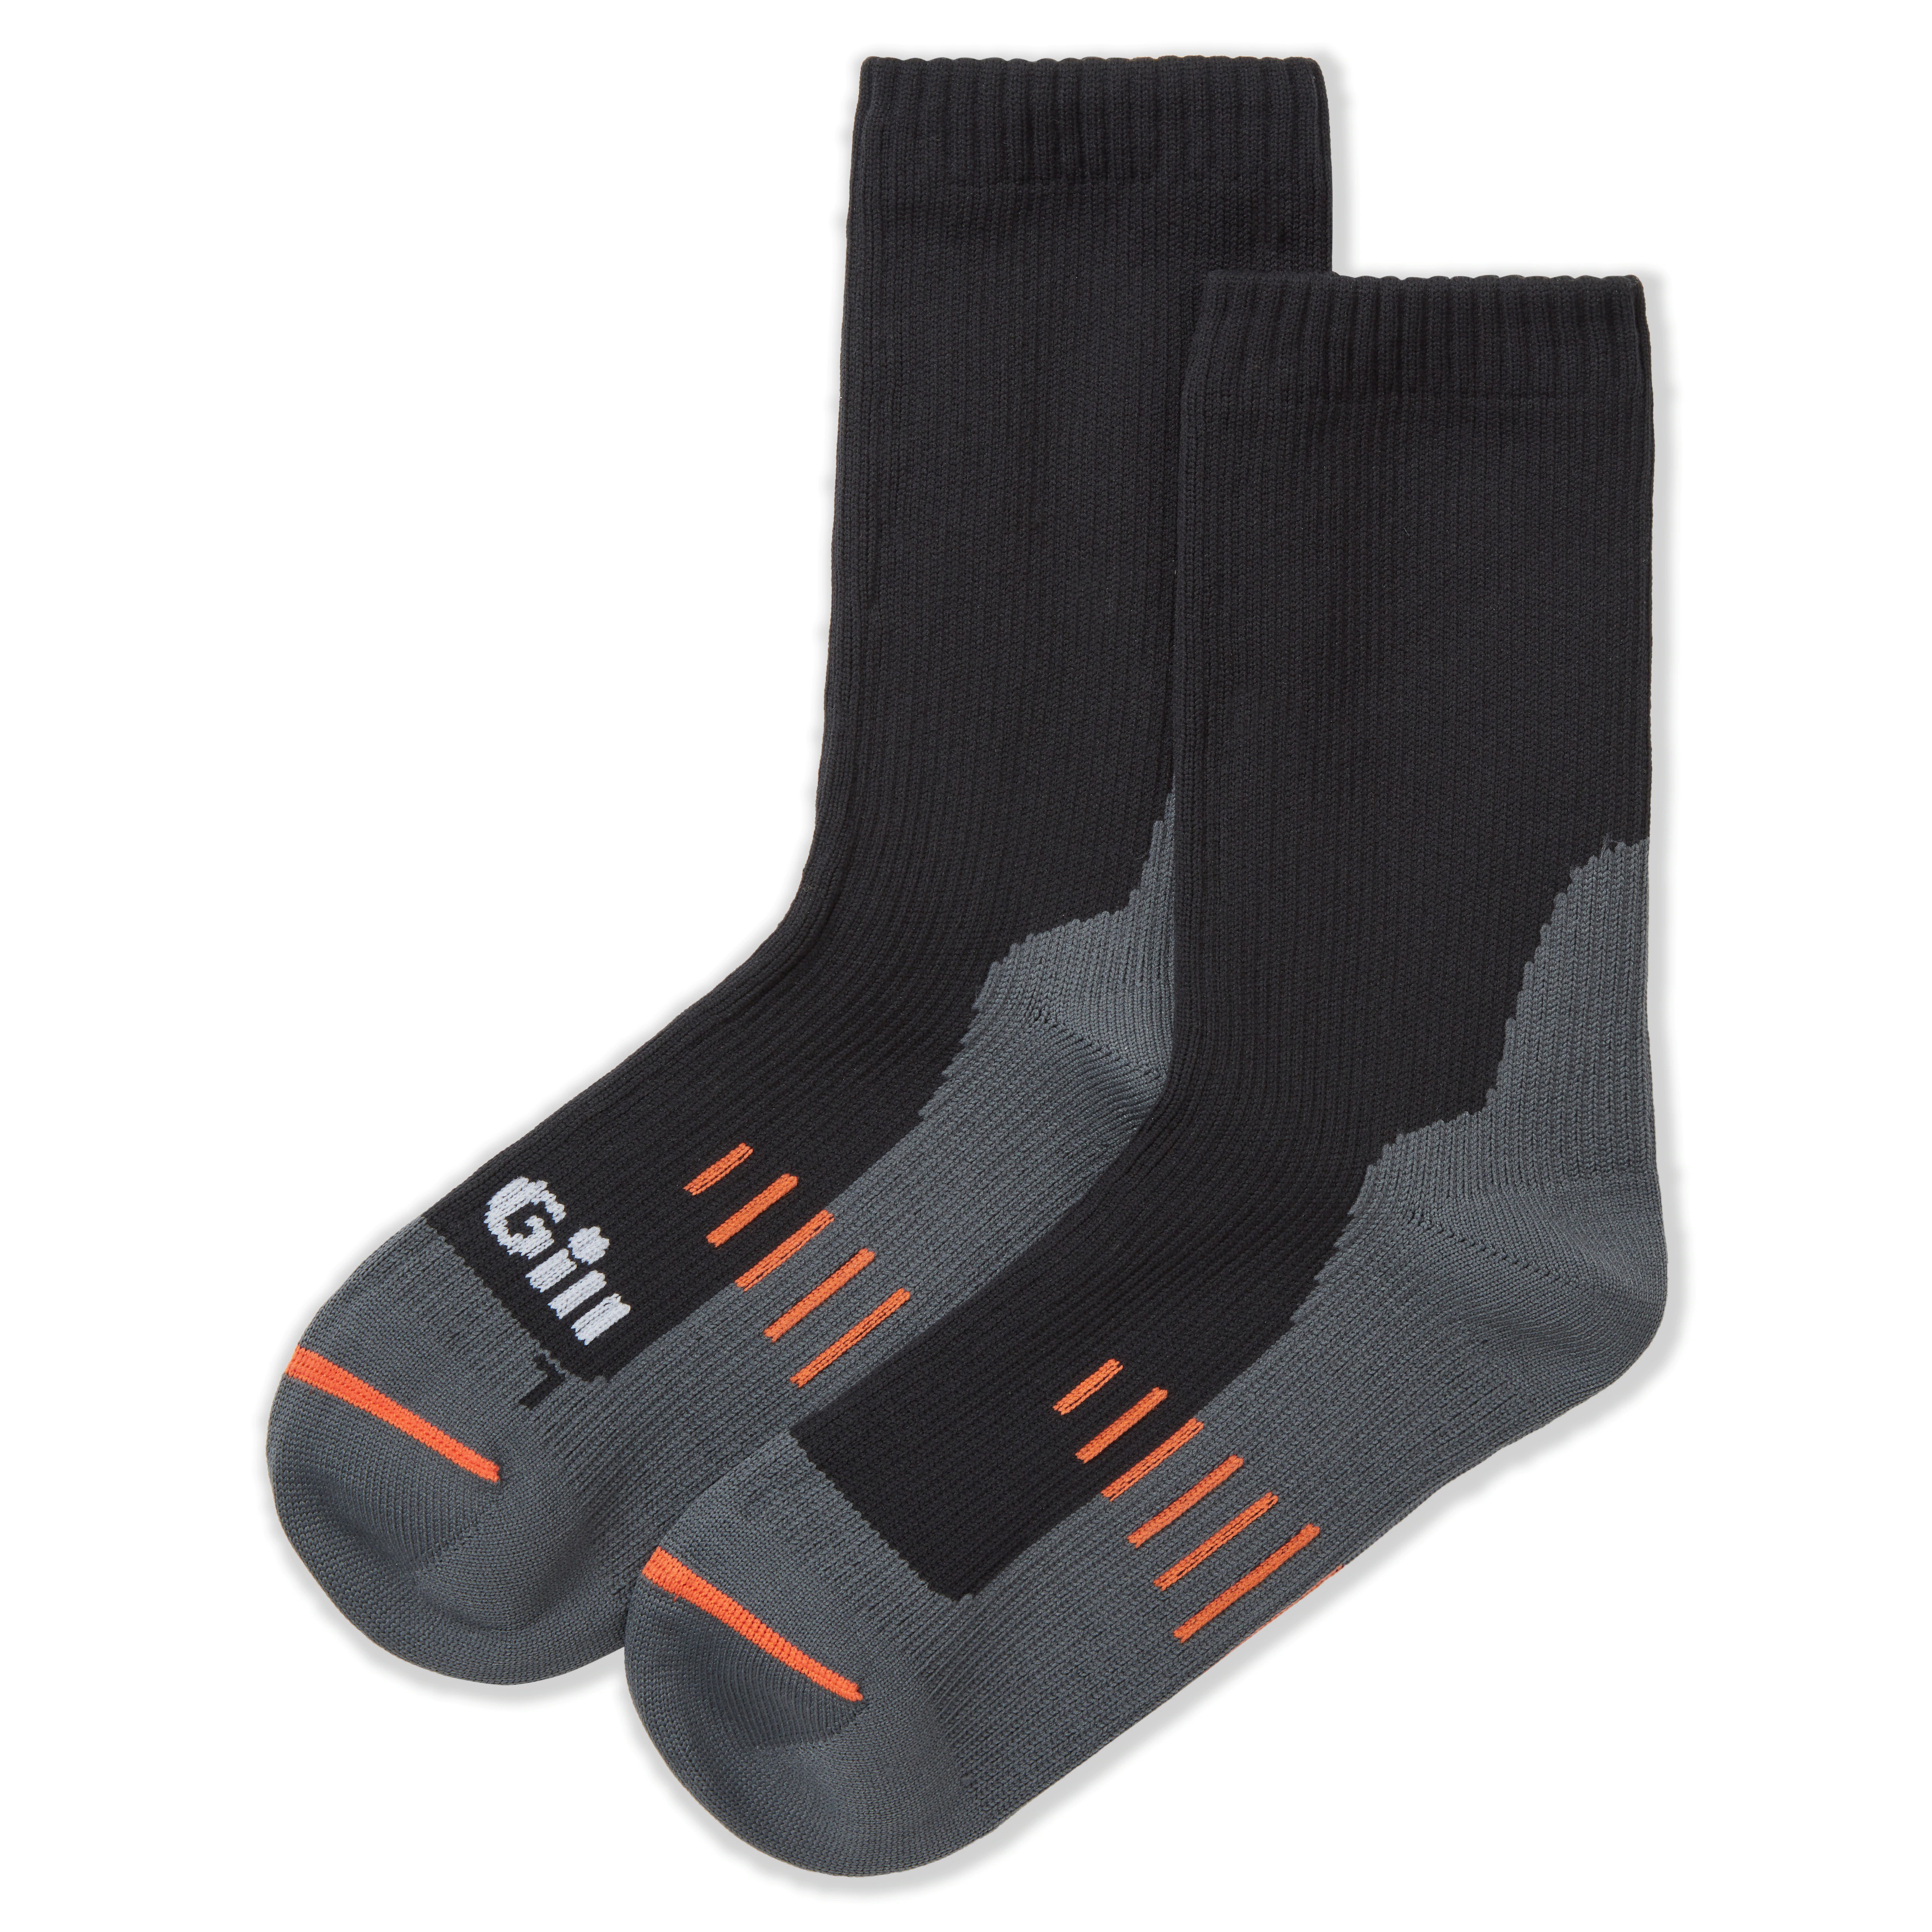 Waterproof socks - medium